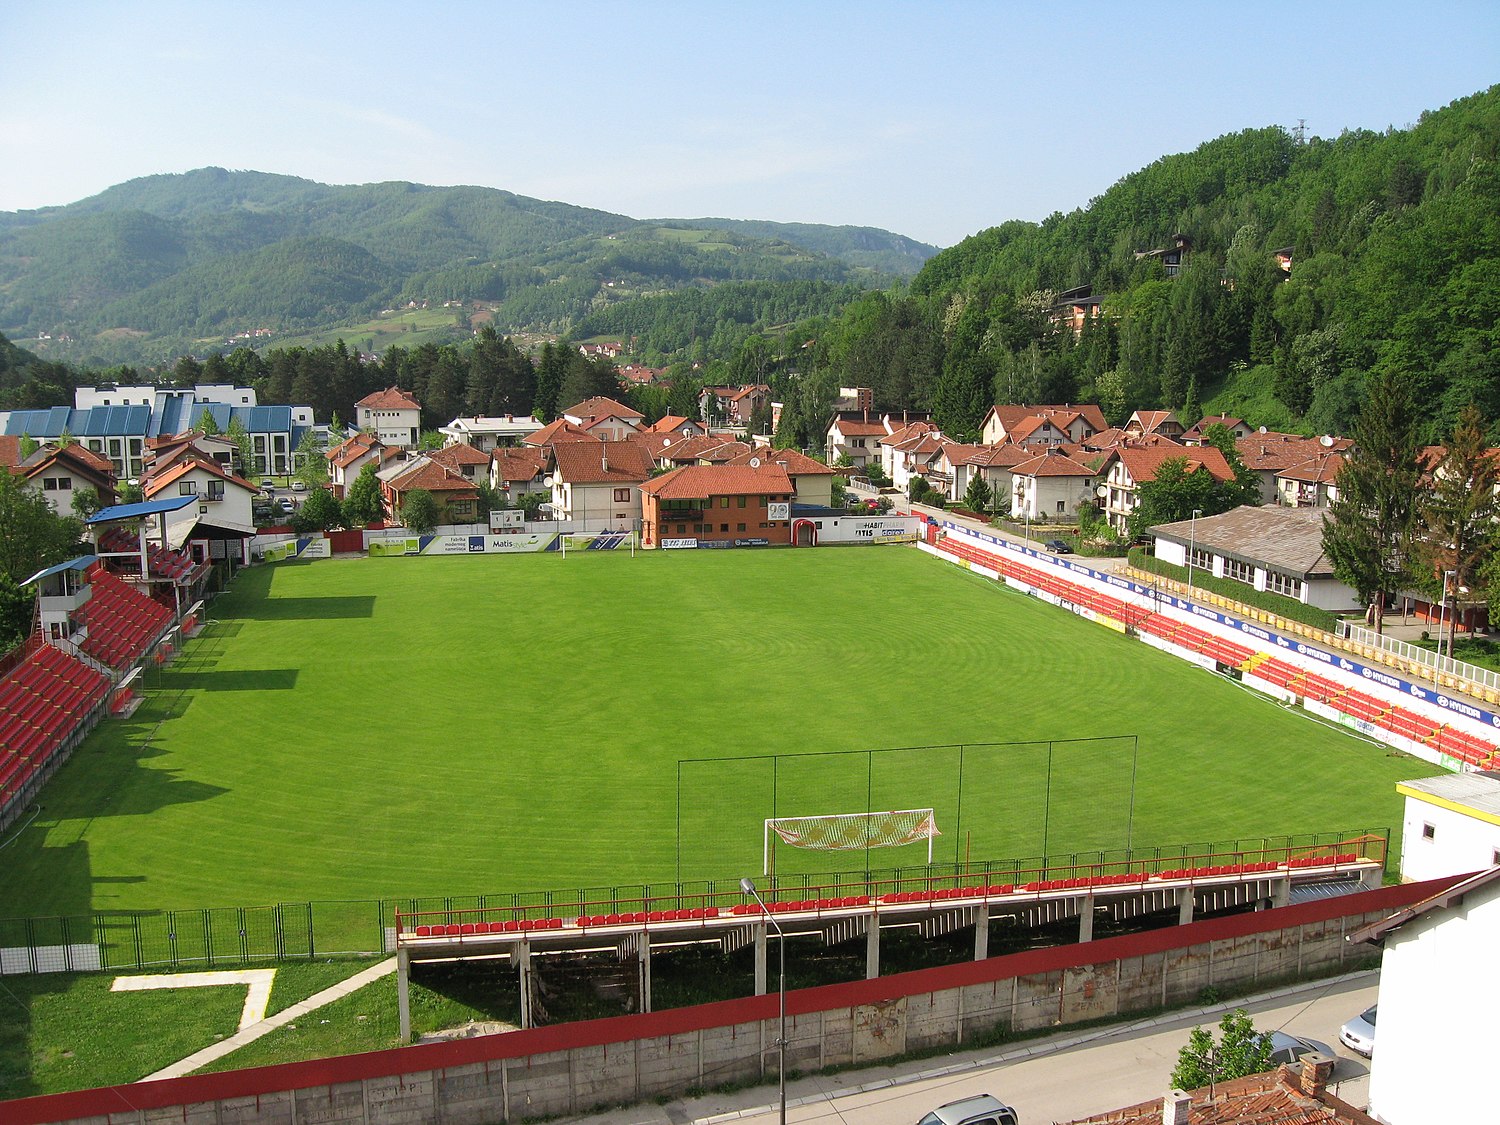 FK Javor Ivanjica, Football Wiki